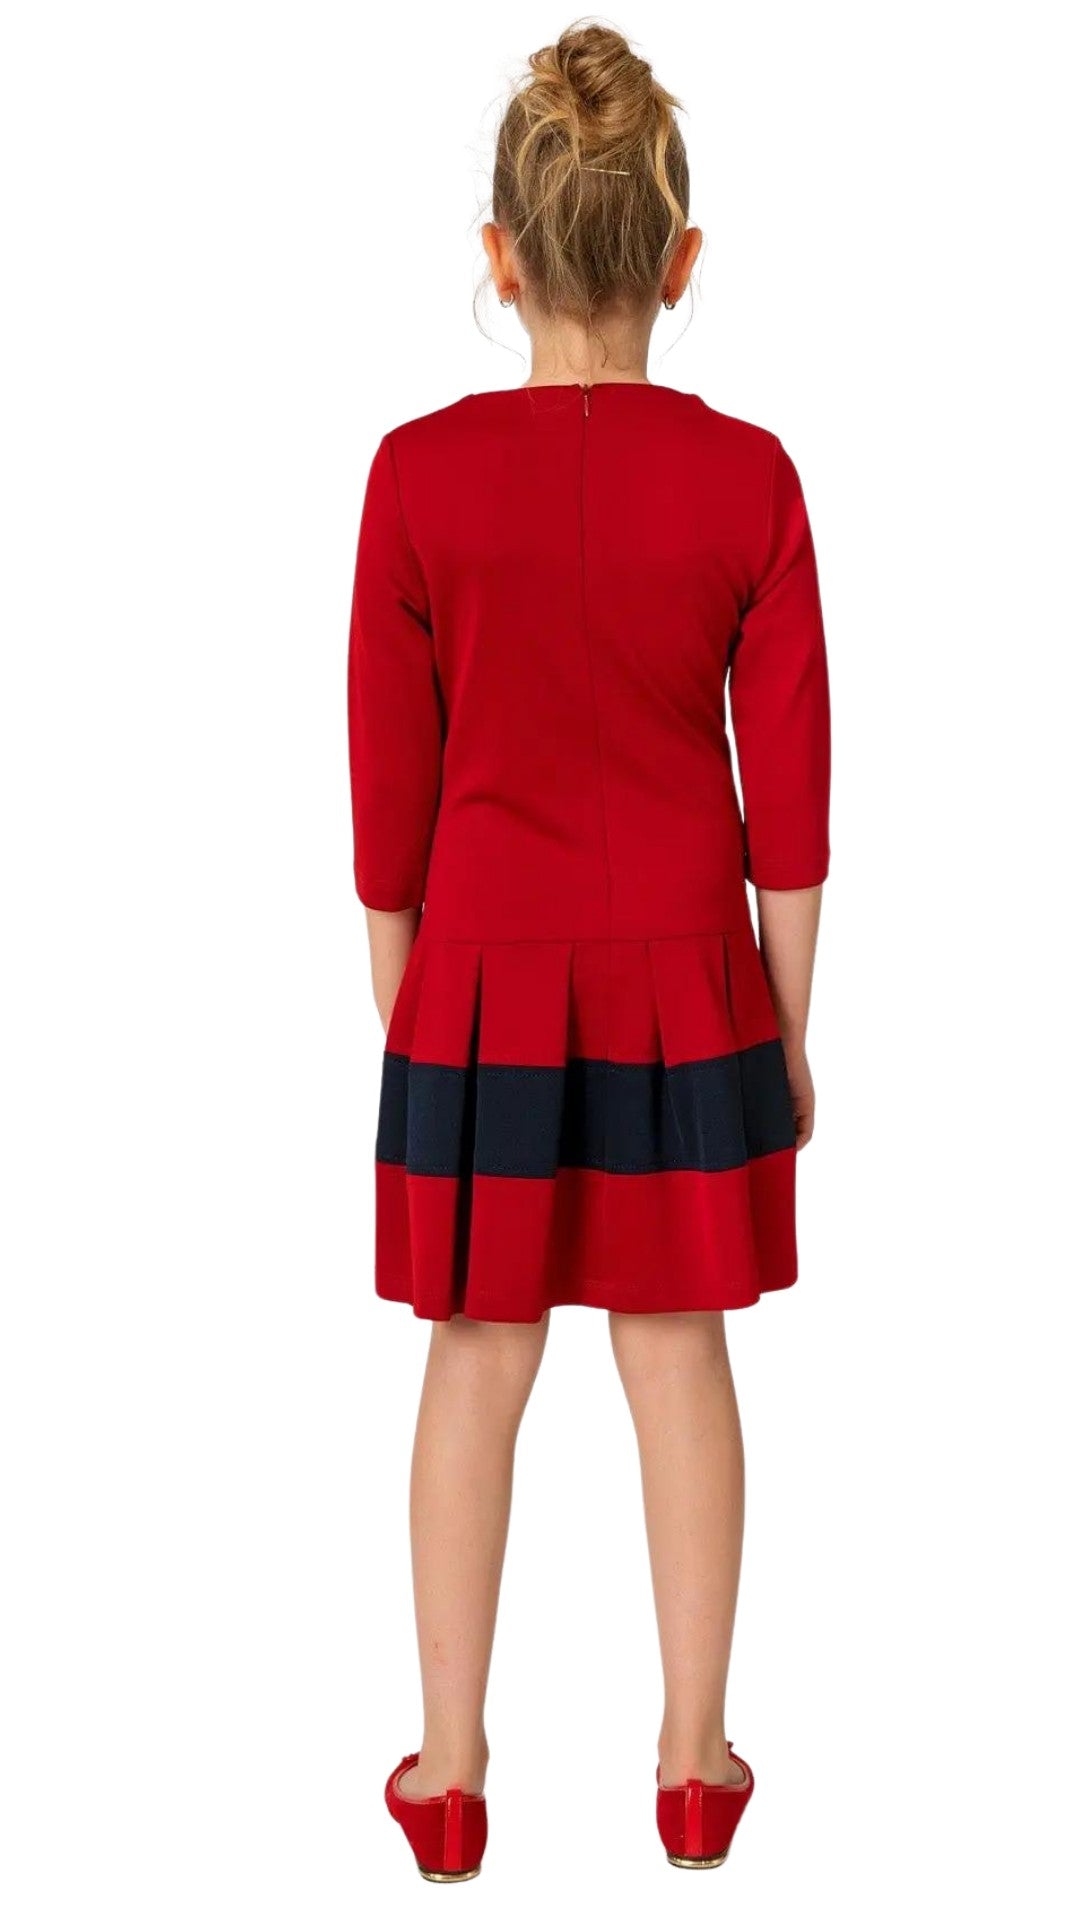 InCity Girls Tween 7-14 Years Red Blue Round Neck 3/4 Sleeve Fashion Blaze Dress InCity Boys & Girls